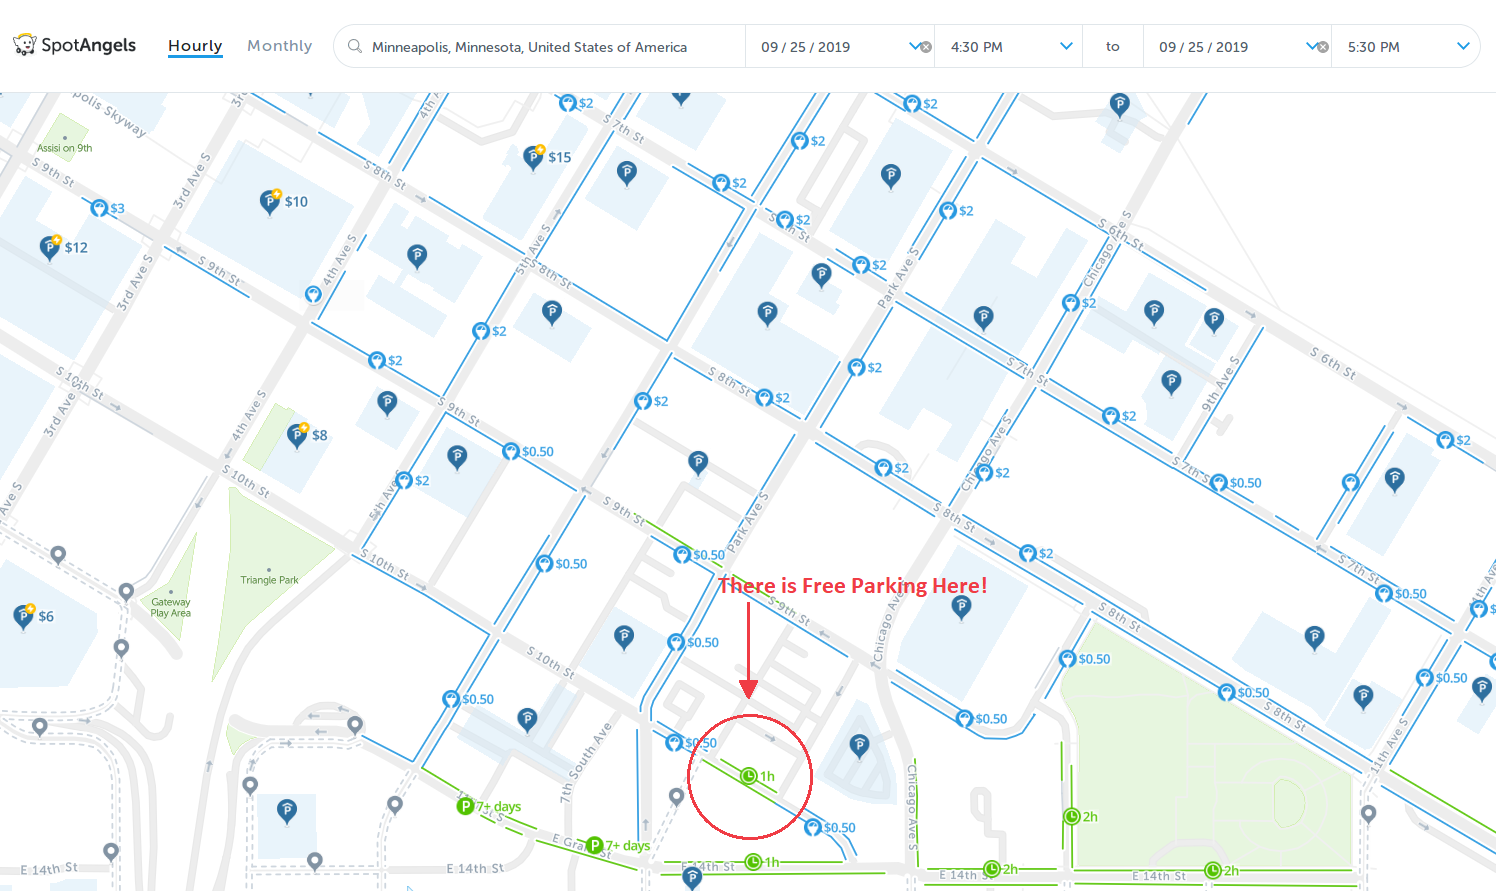 map of street parking in Minneapolis - SpotAngels